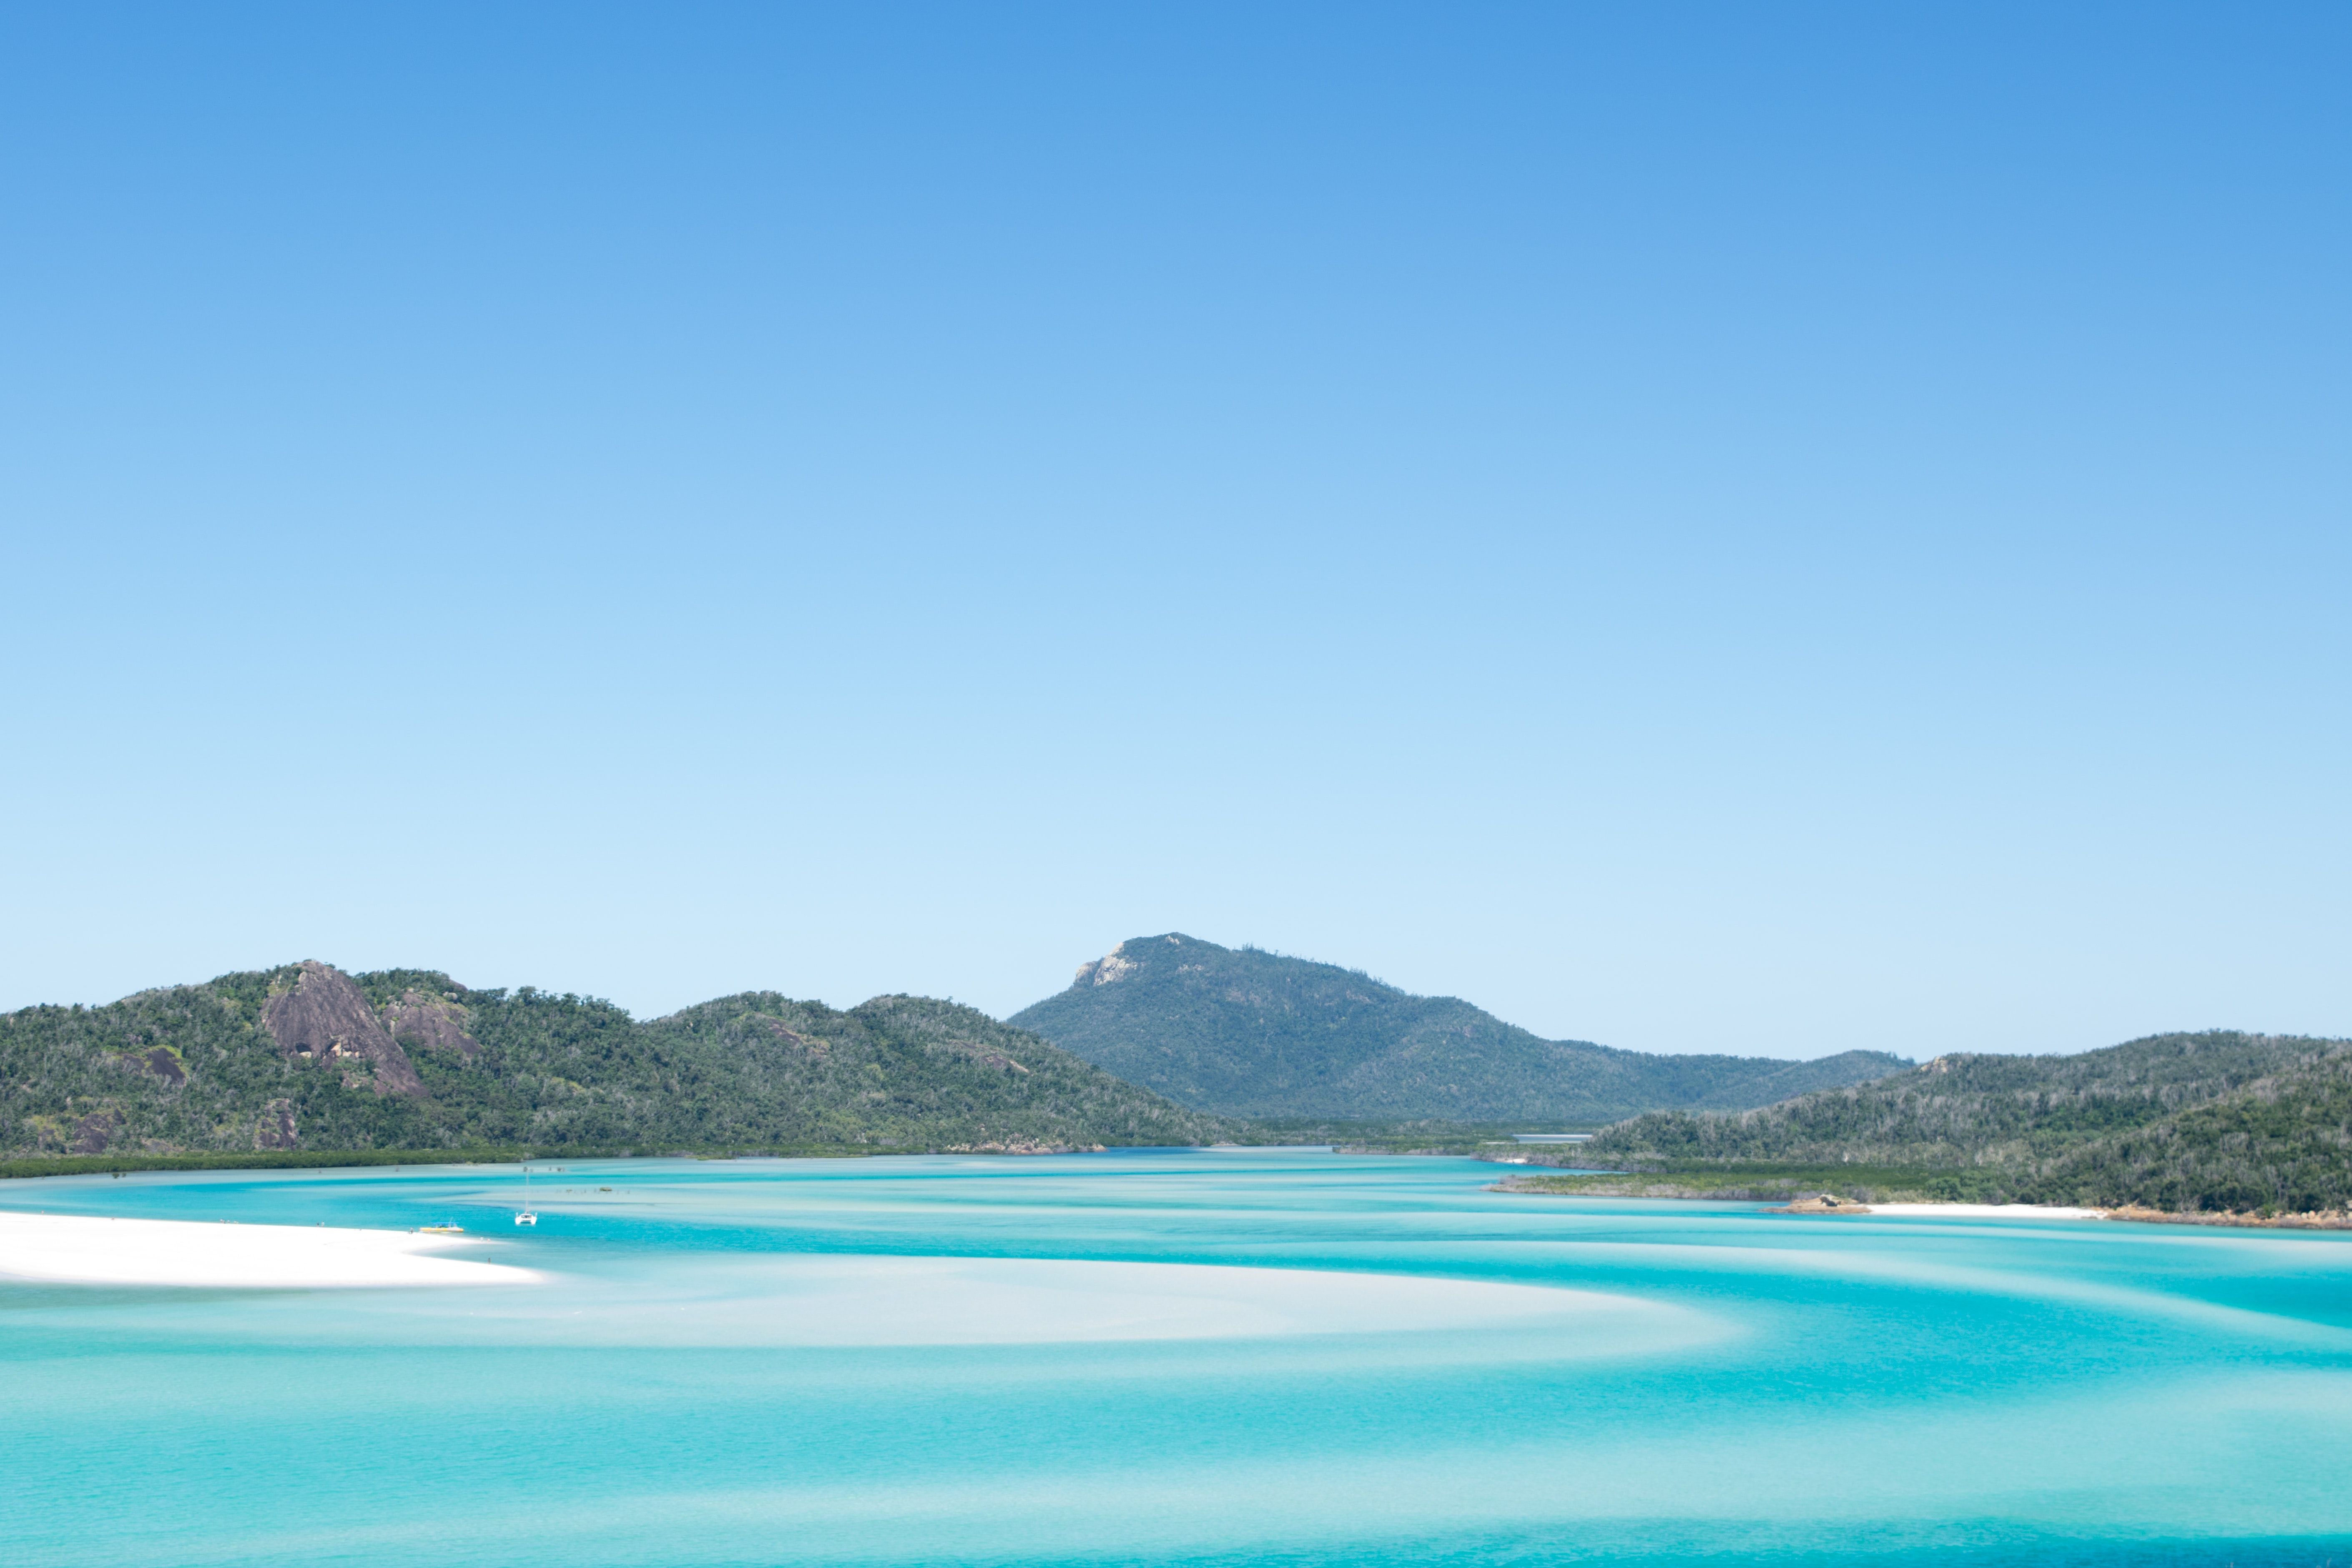 The stunning Whitsunday Islands in Australia